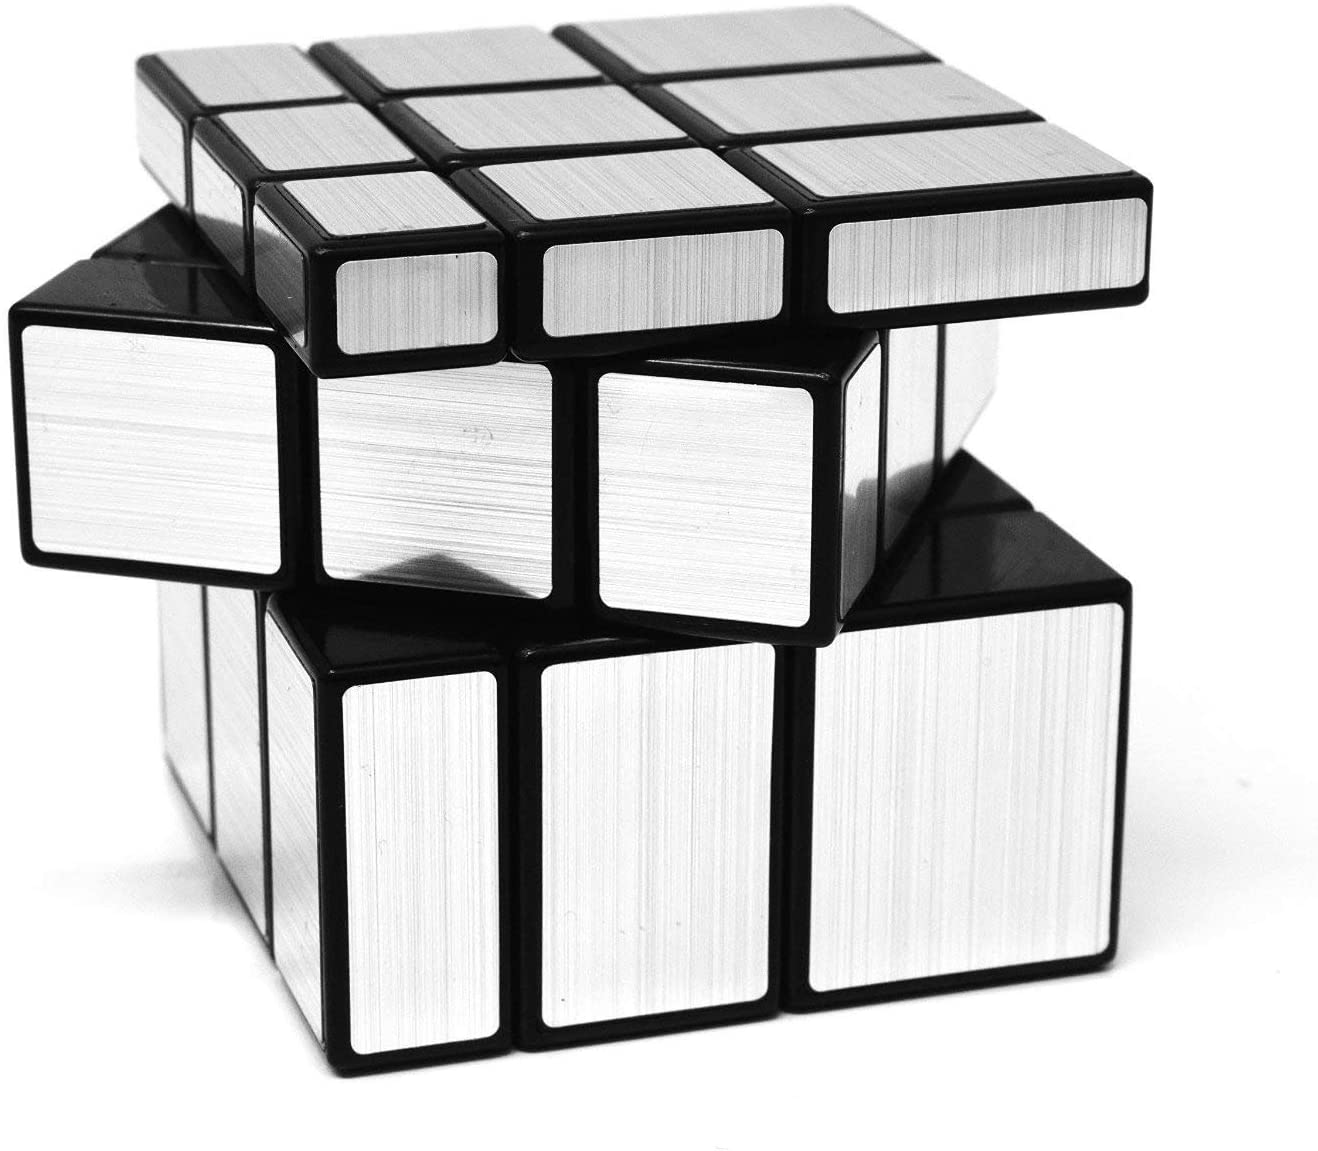 New Jaipur Handicraft Silver Mirror Rubik's Cube - Lamansh